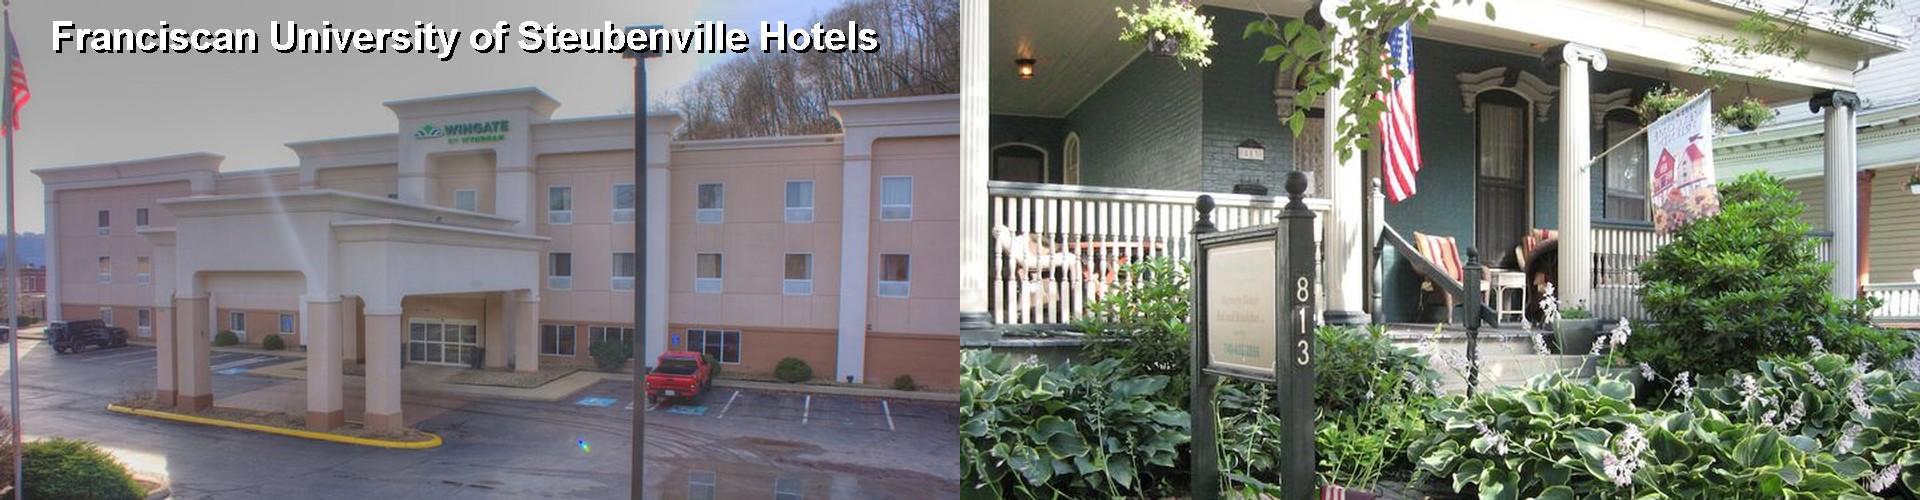 5 Best Hotels near Franciscan University of Steubenville